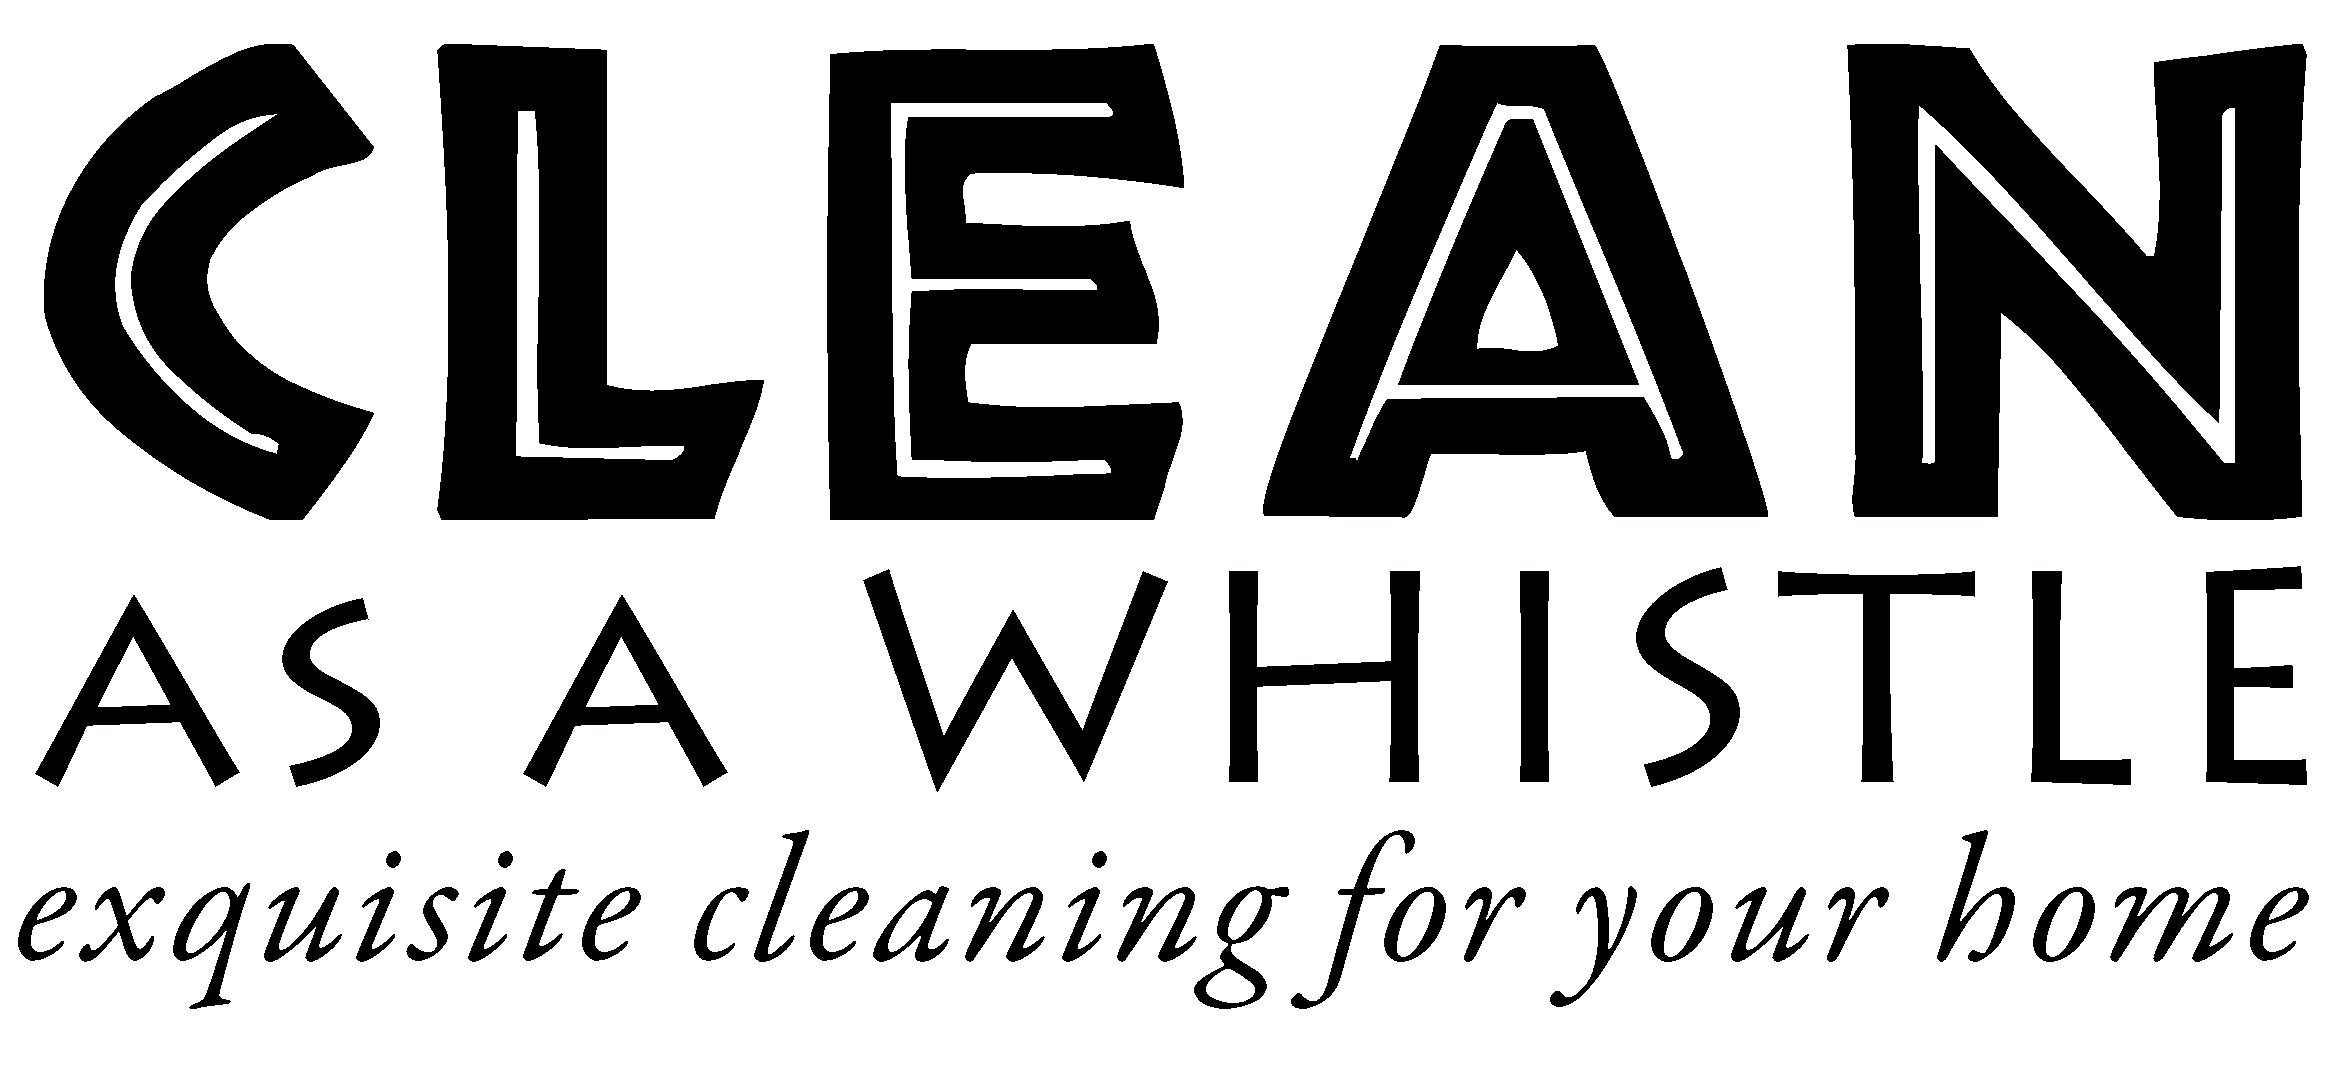 Clean As A Whistle Logo